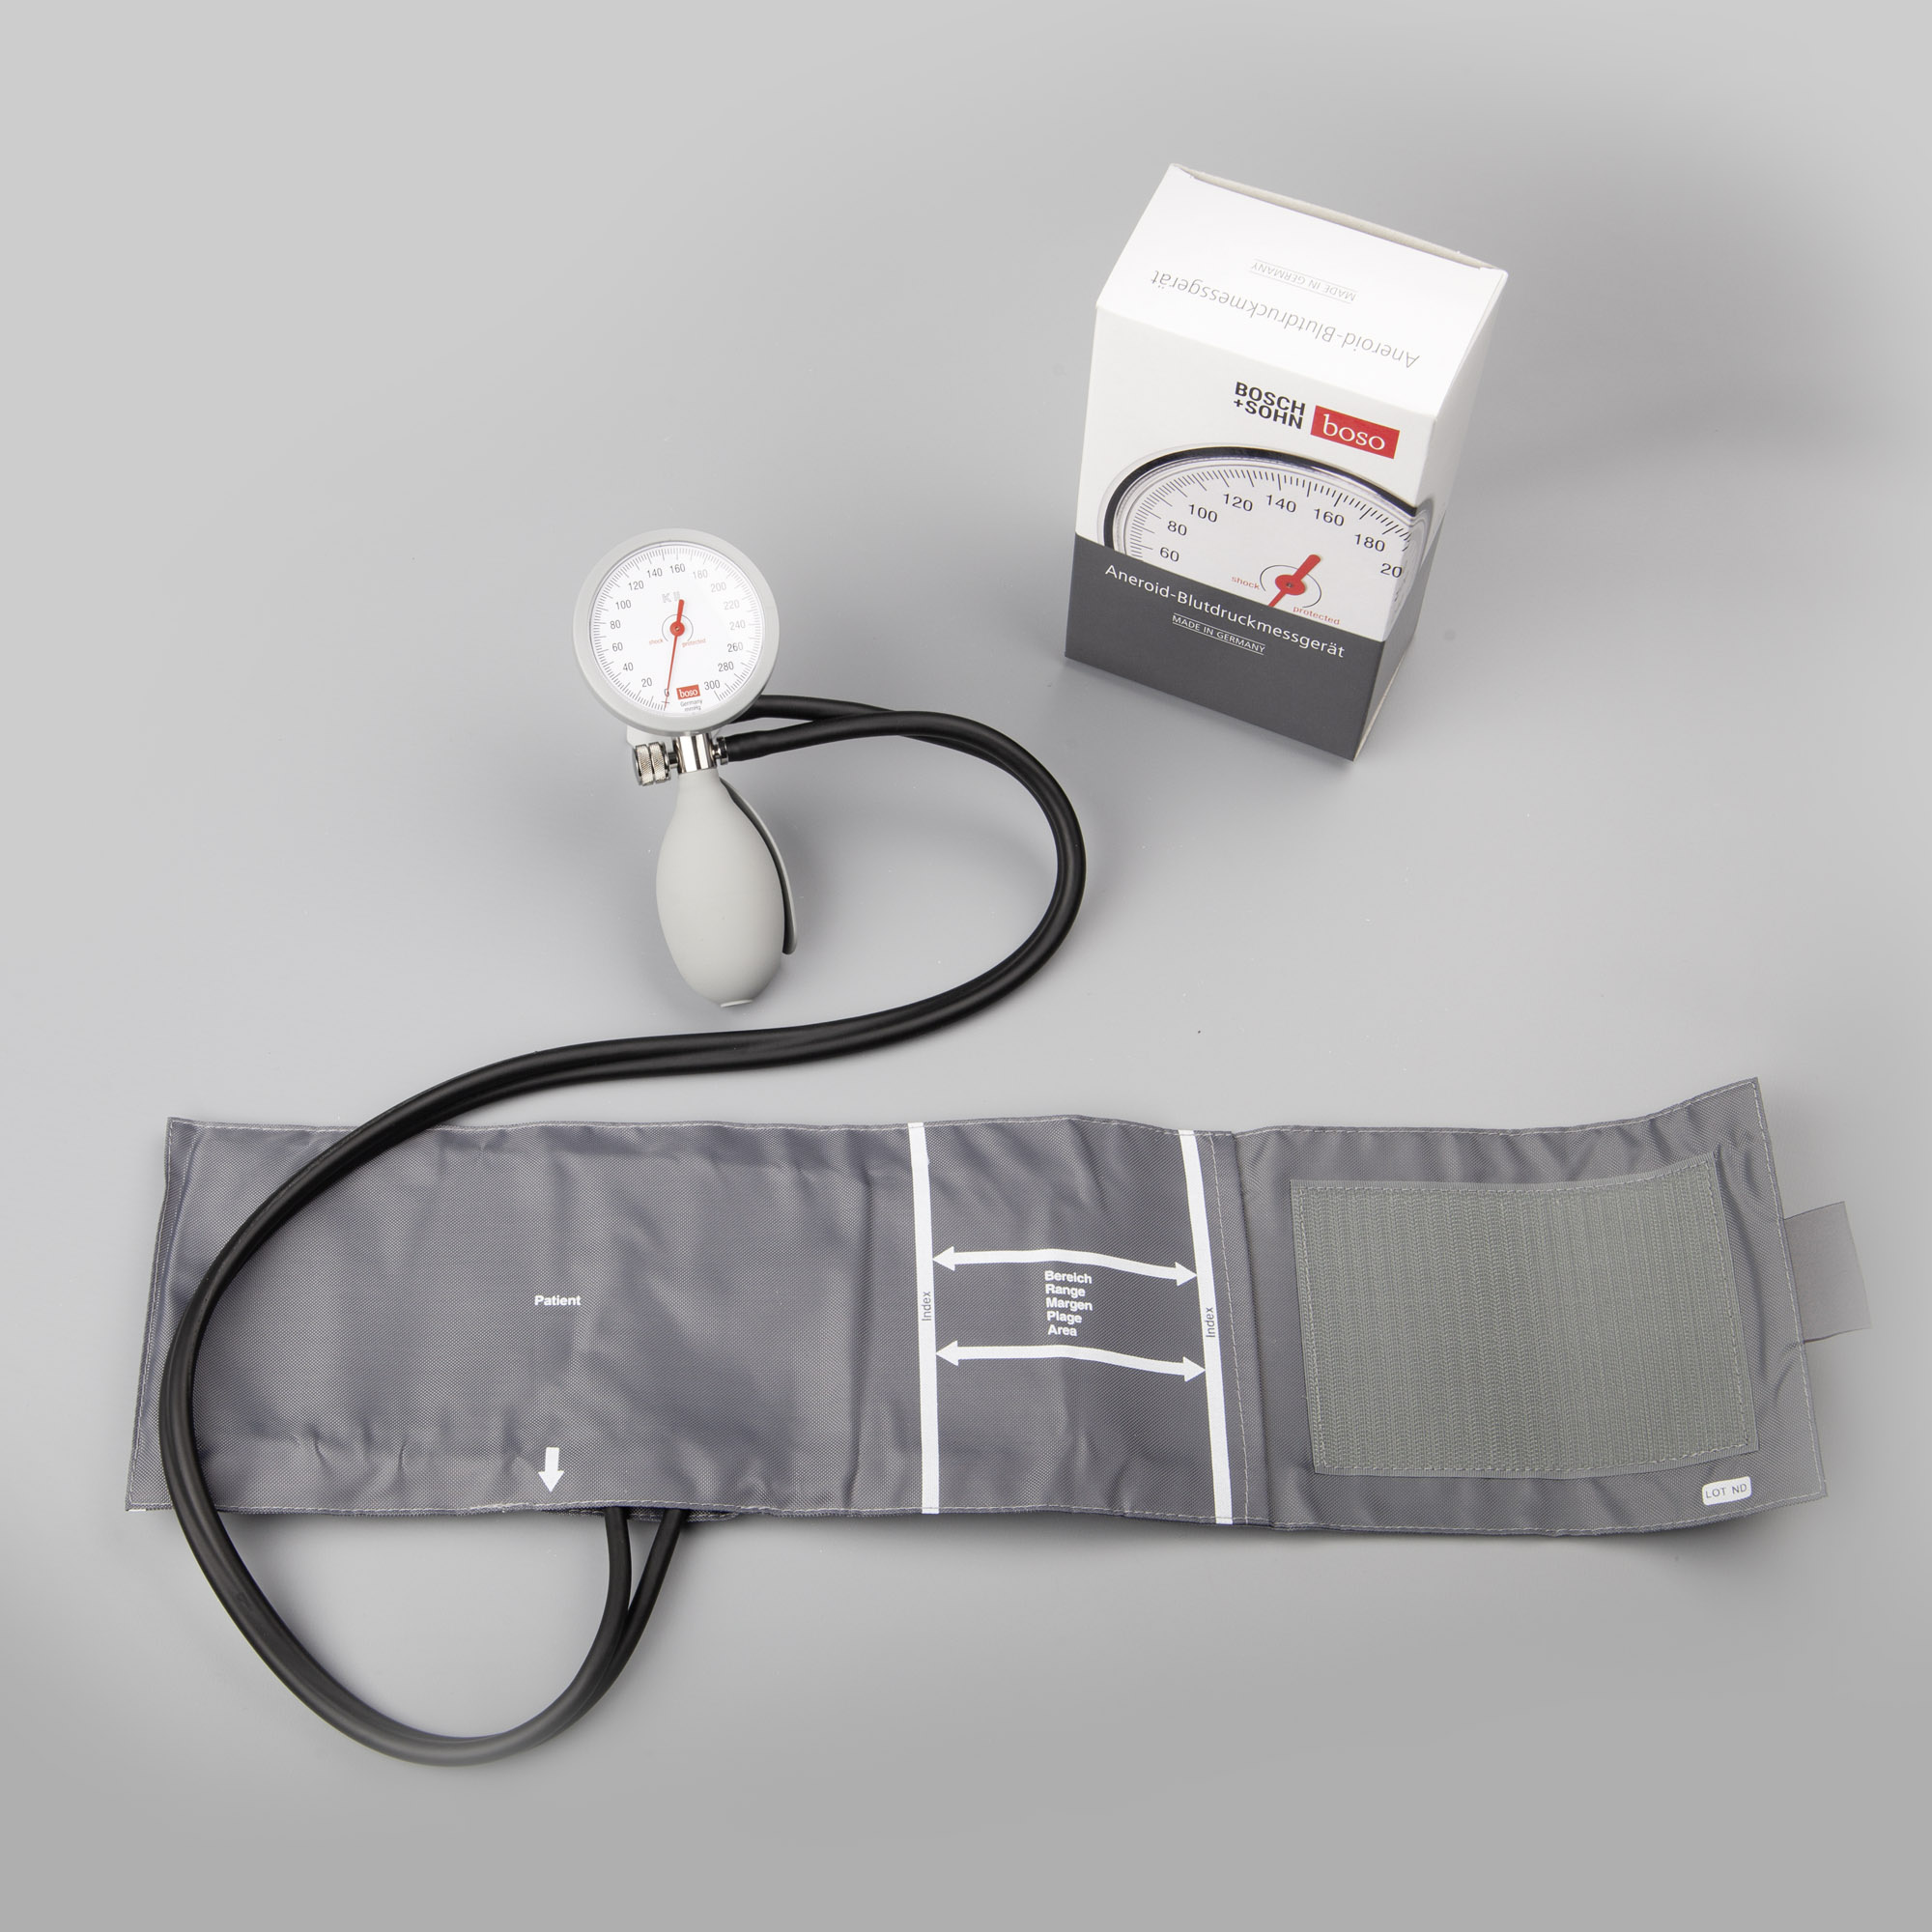 BOSO K II-Blutdruck-Messgerät für Kinder